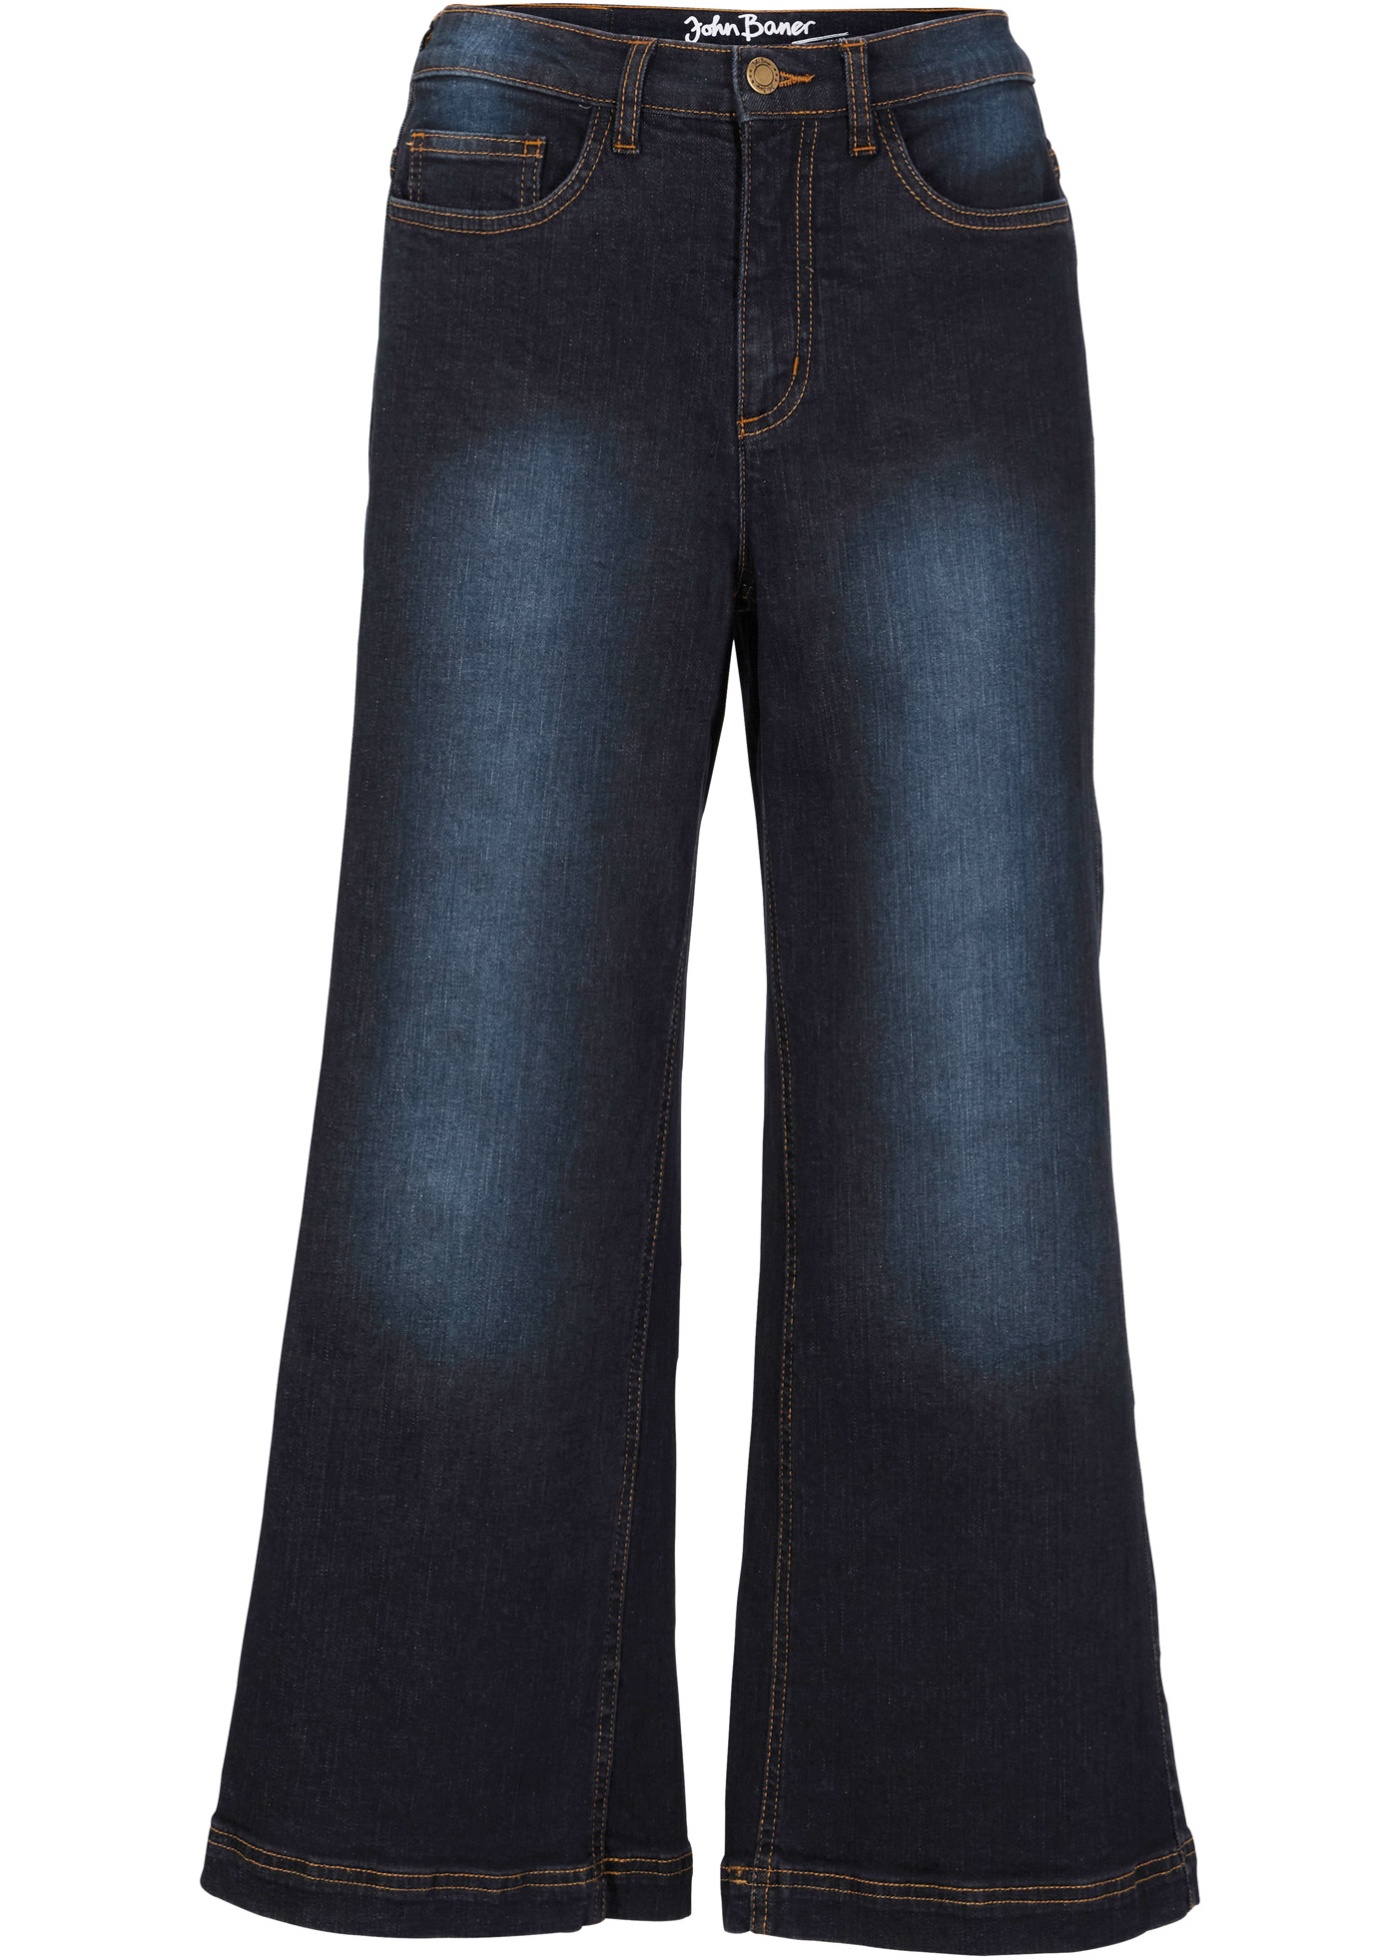 Corrigerende stretch jeans, culotte